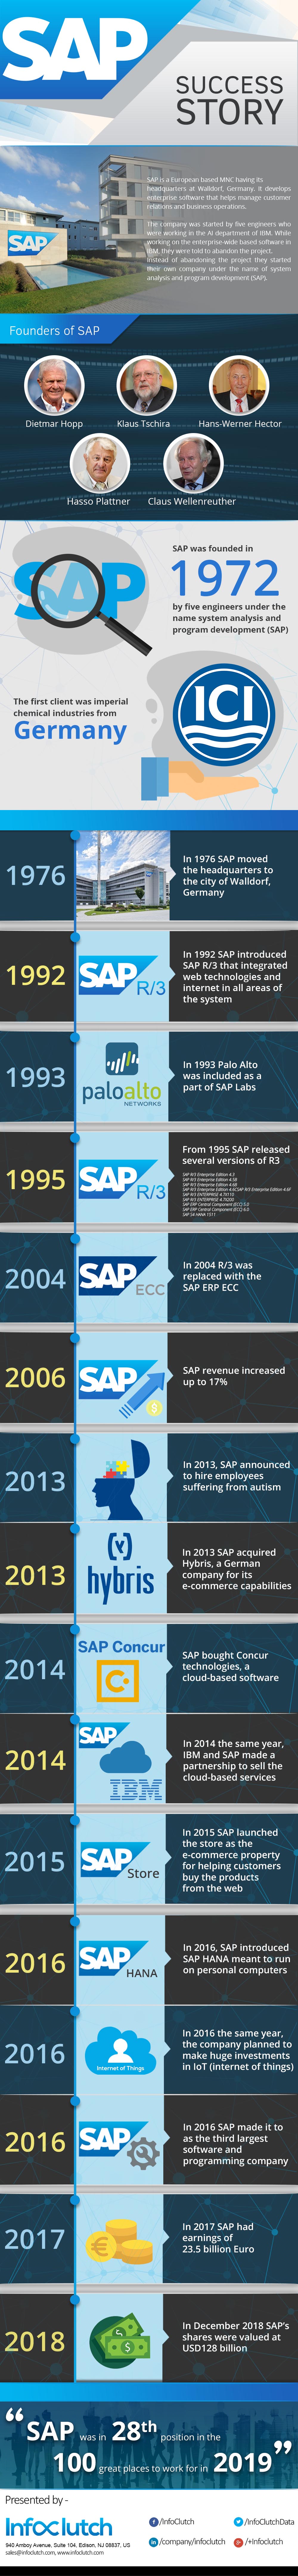 Success Story of SAP Milestones & Achievements